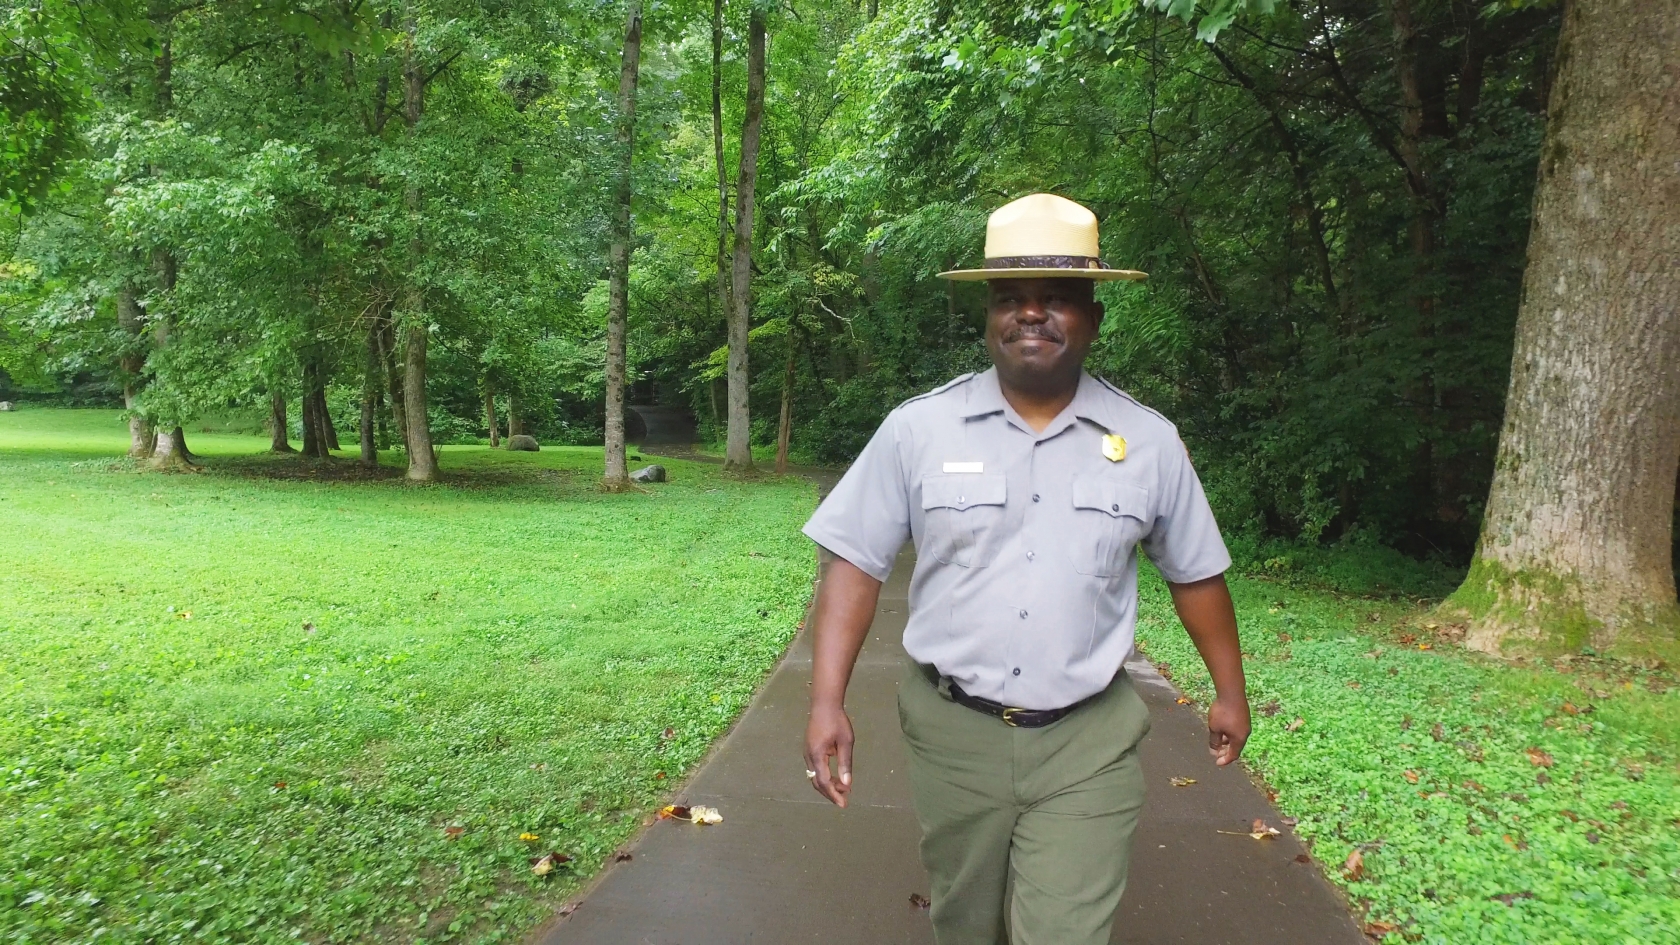 Superintendent Cassius Cash wears a park ranger uniform and walks along a wooded path